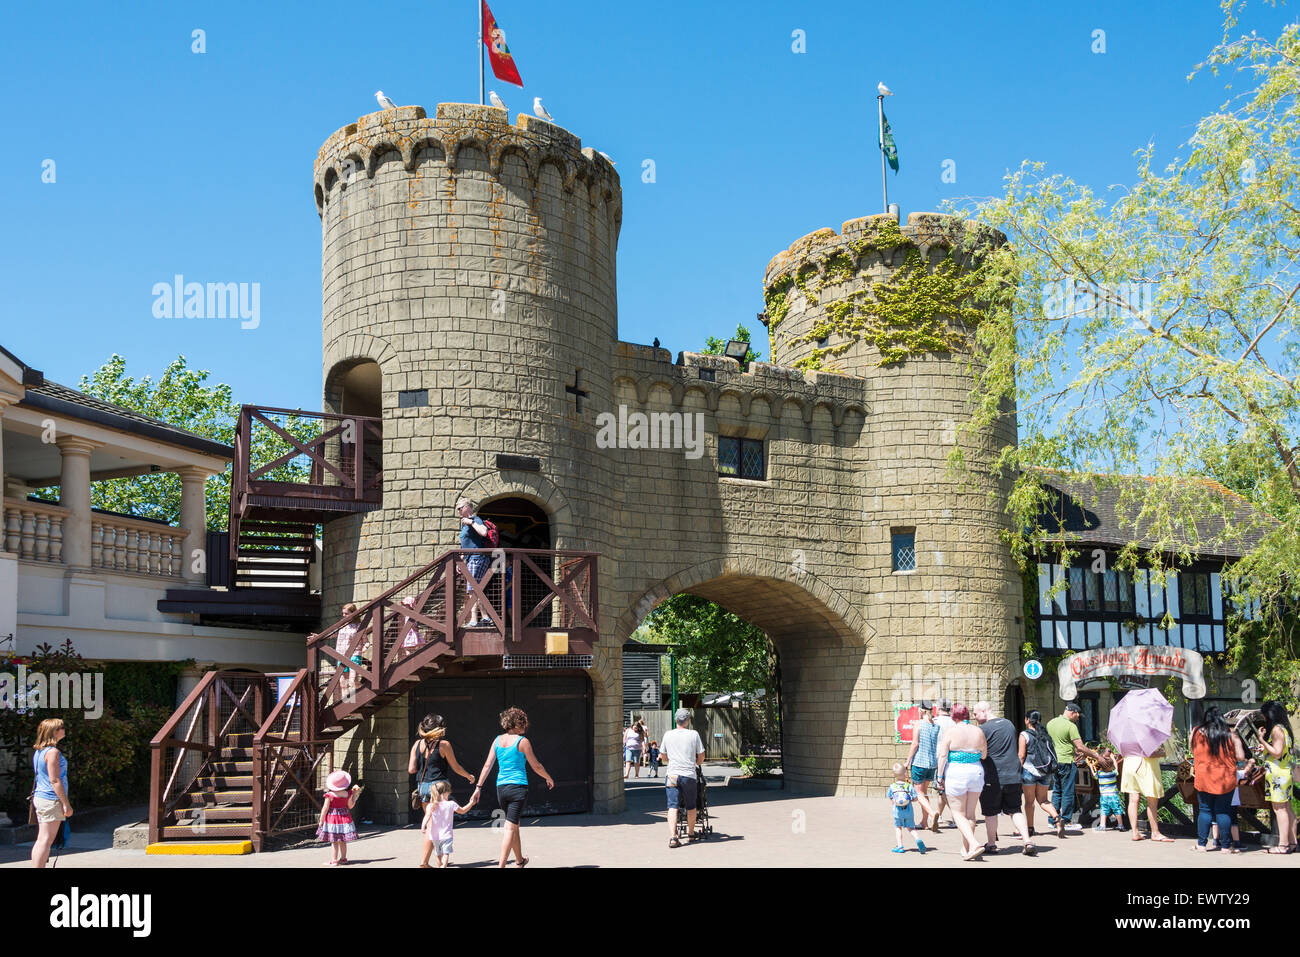 Castle Gate, Market Square, Chessington World of Adventures Theme Park, Chessington, Surrey, England, United Kingdom Stock Photo